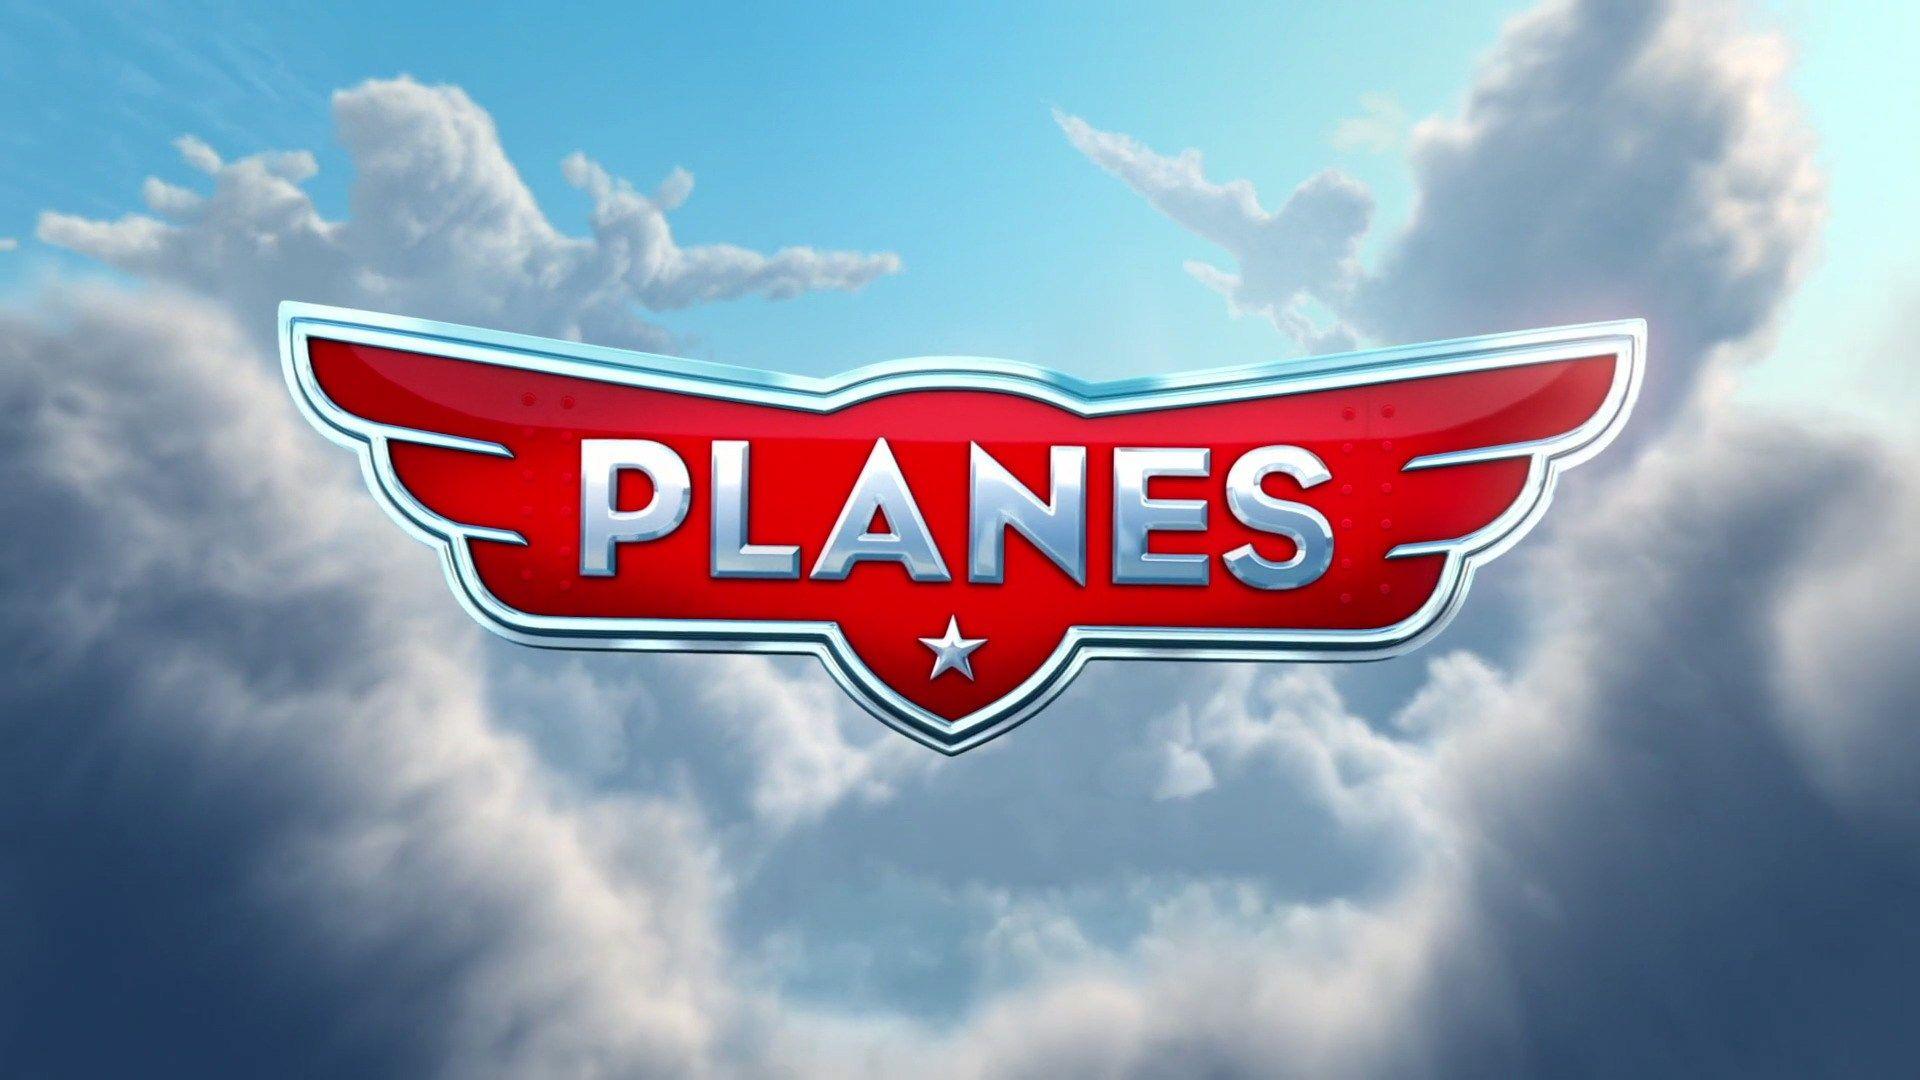 Disney Planes Movie Logo - Planes (2013) - Animation Screencaps